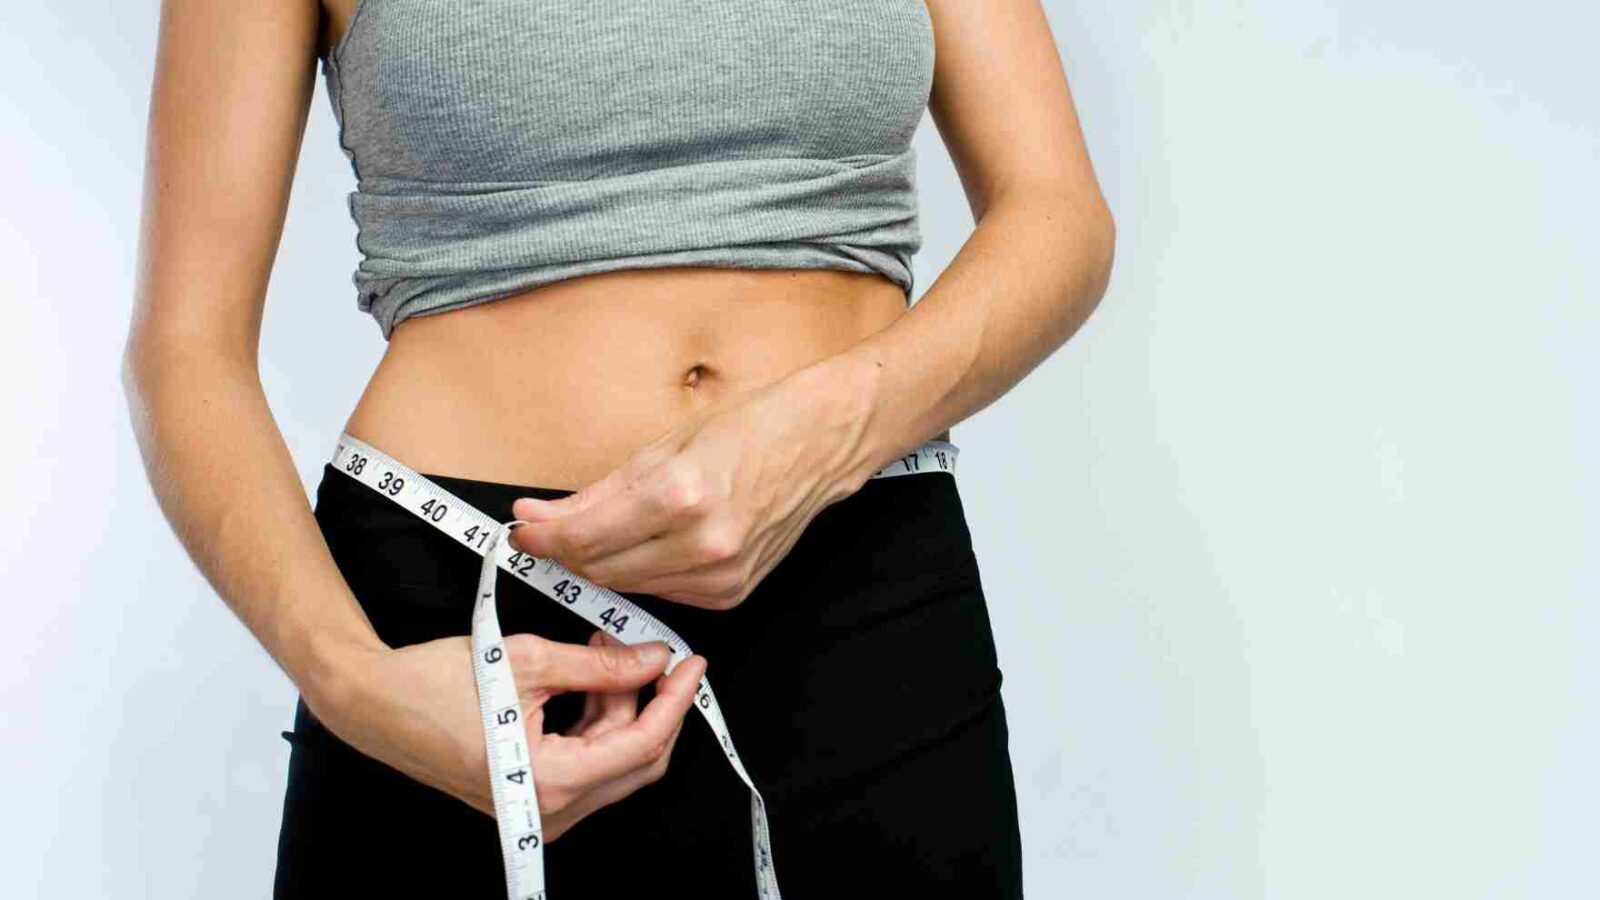 Key Considerations for Choosing an Online Weight Loss Program